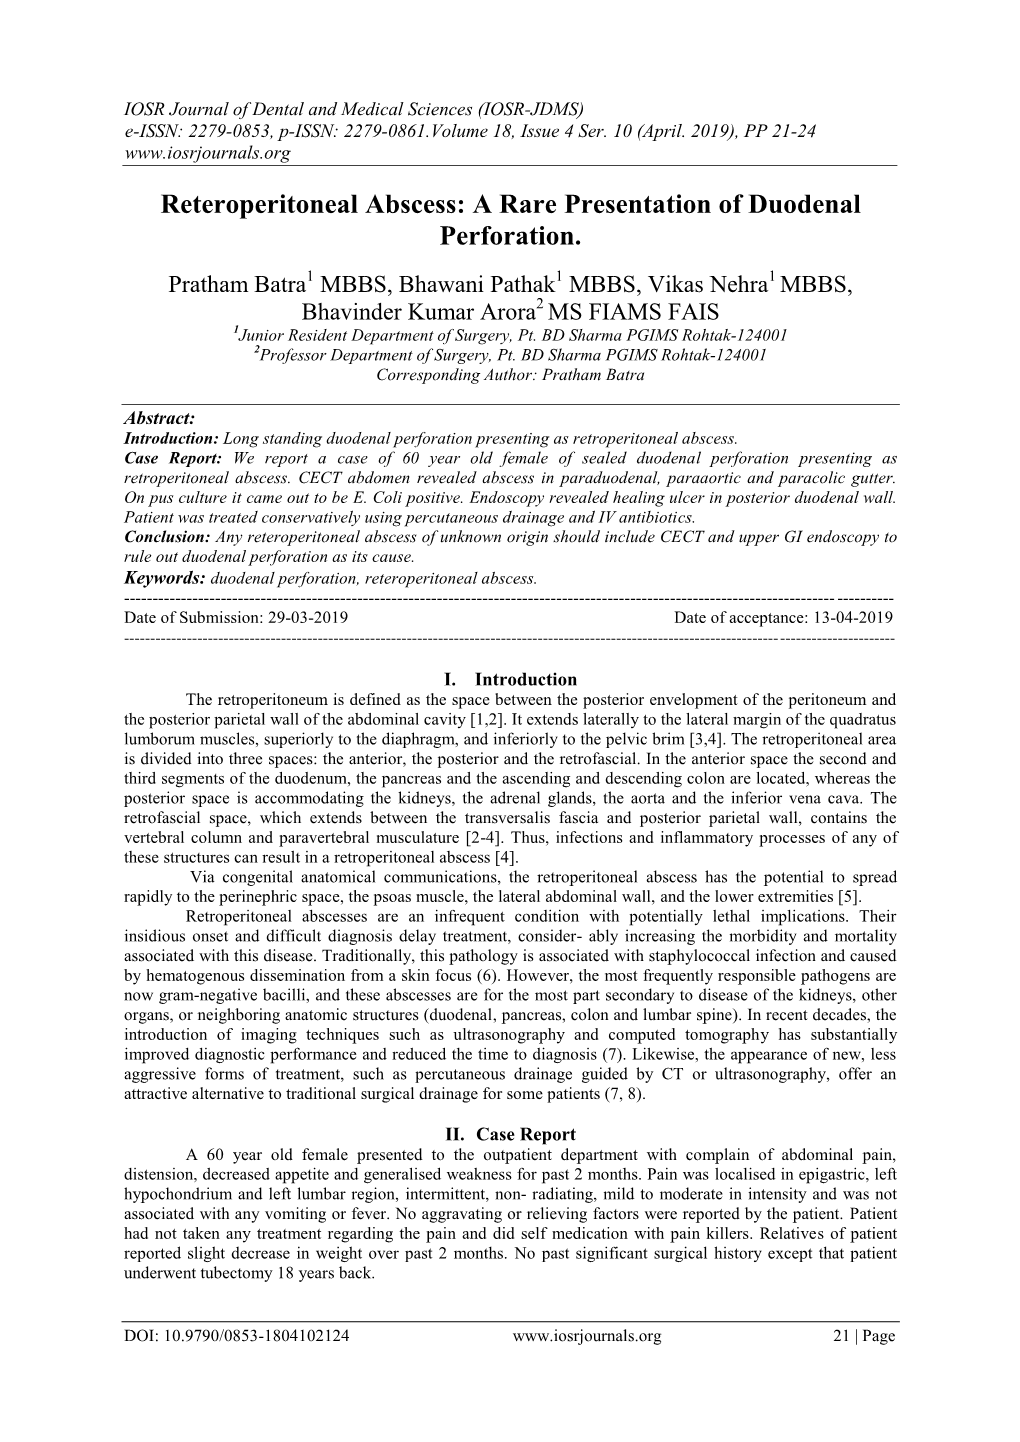 Reteroperitoneal Abscess: a Rare Presentation of Duodenal Perforation